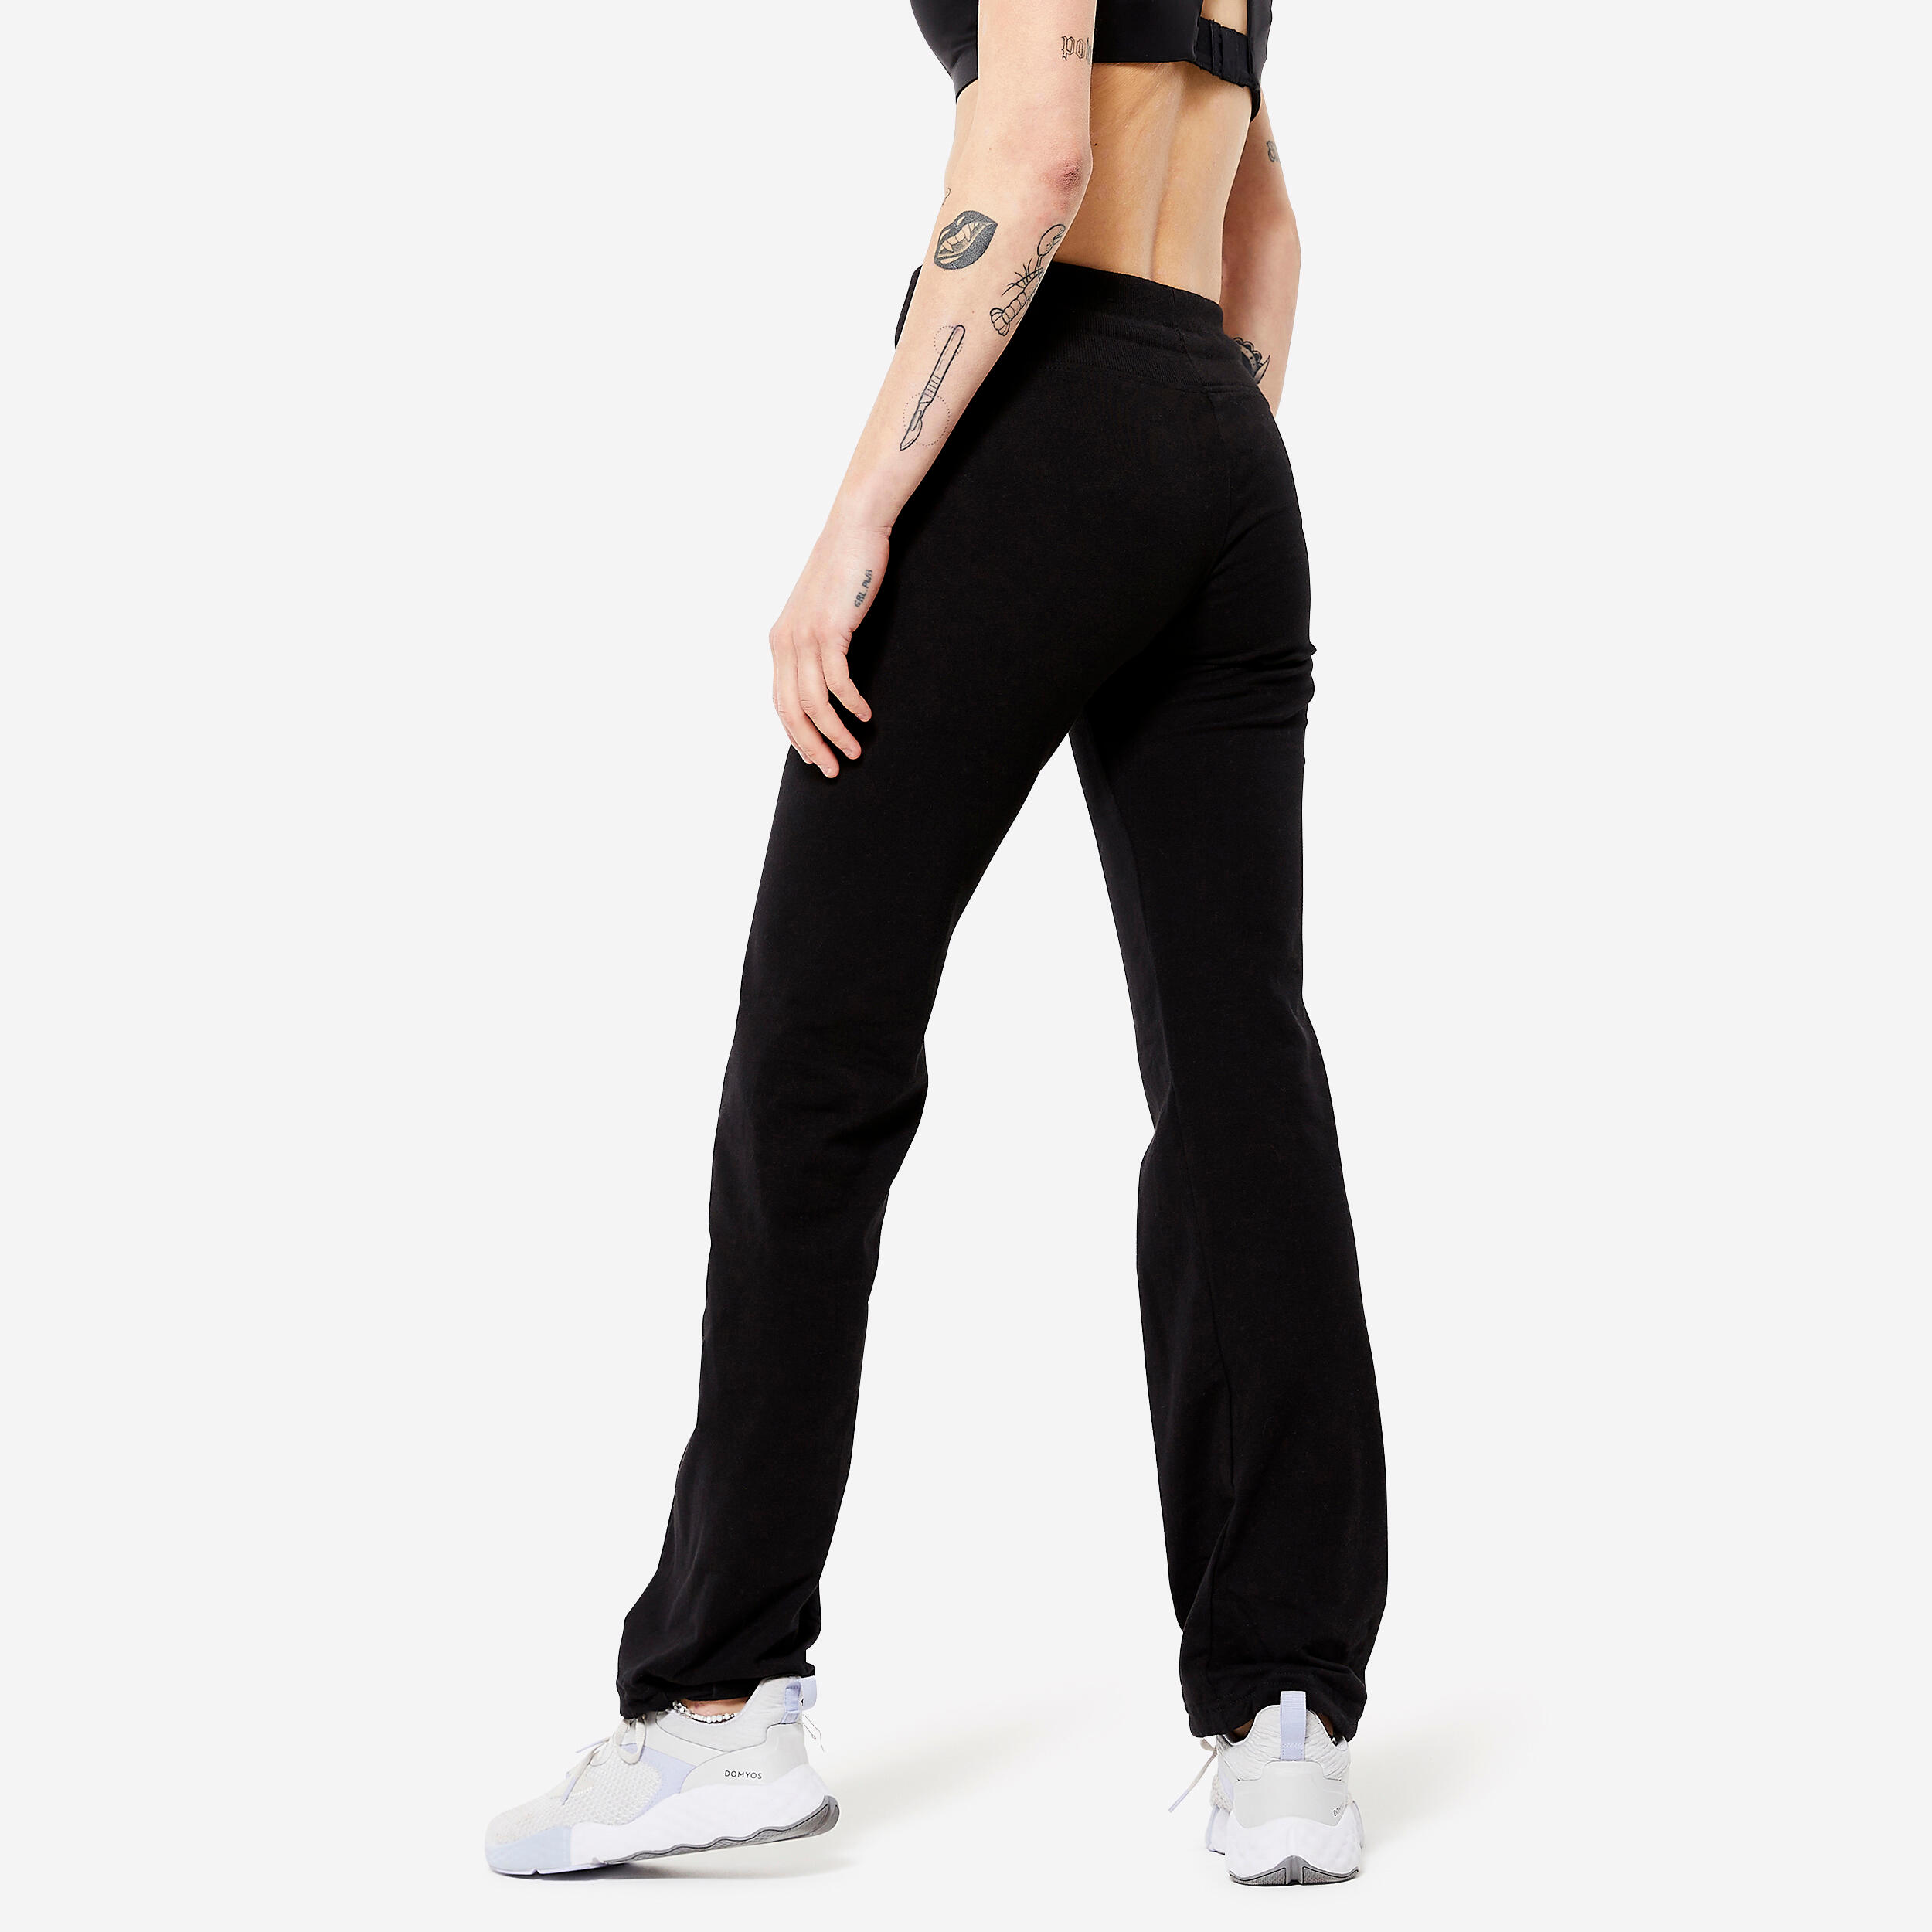 Women’s Loose Modern Dance Pants - Black